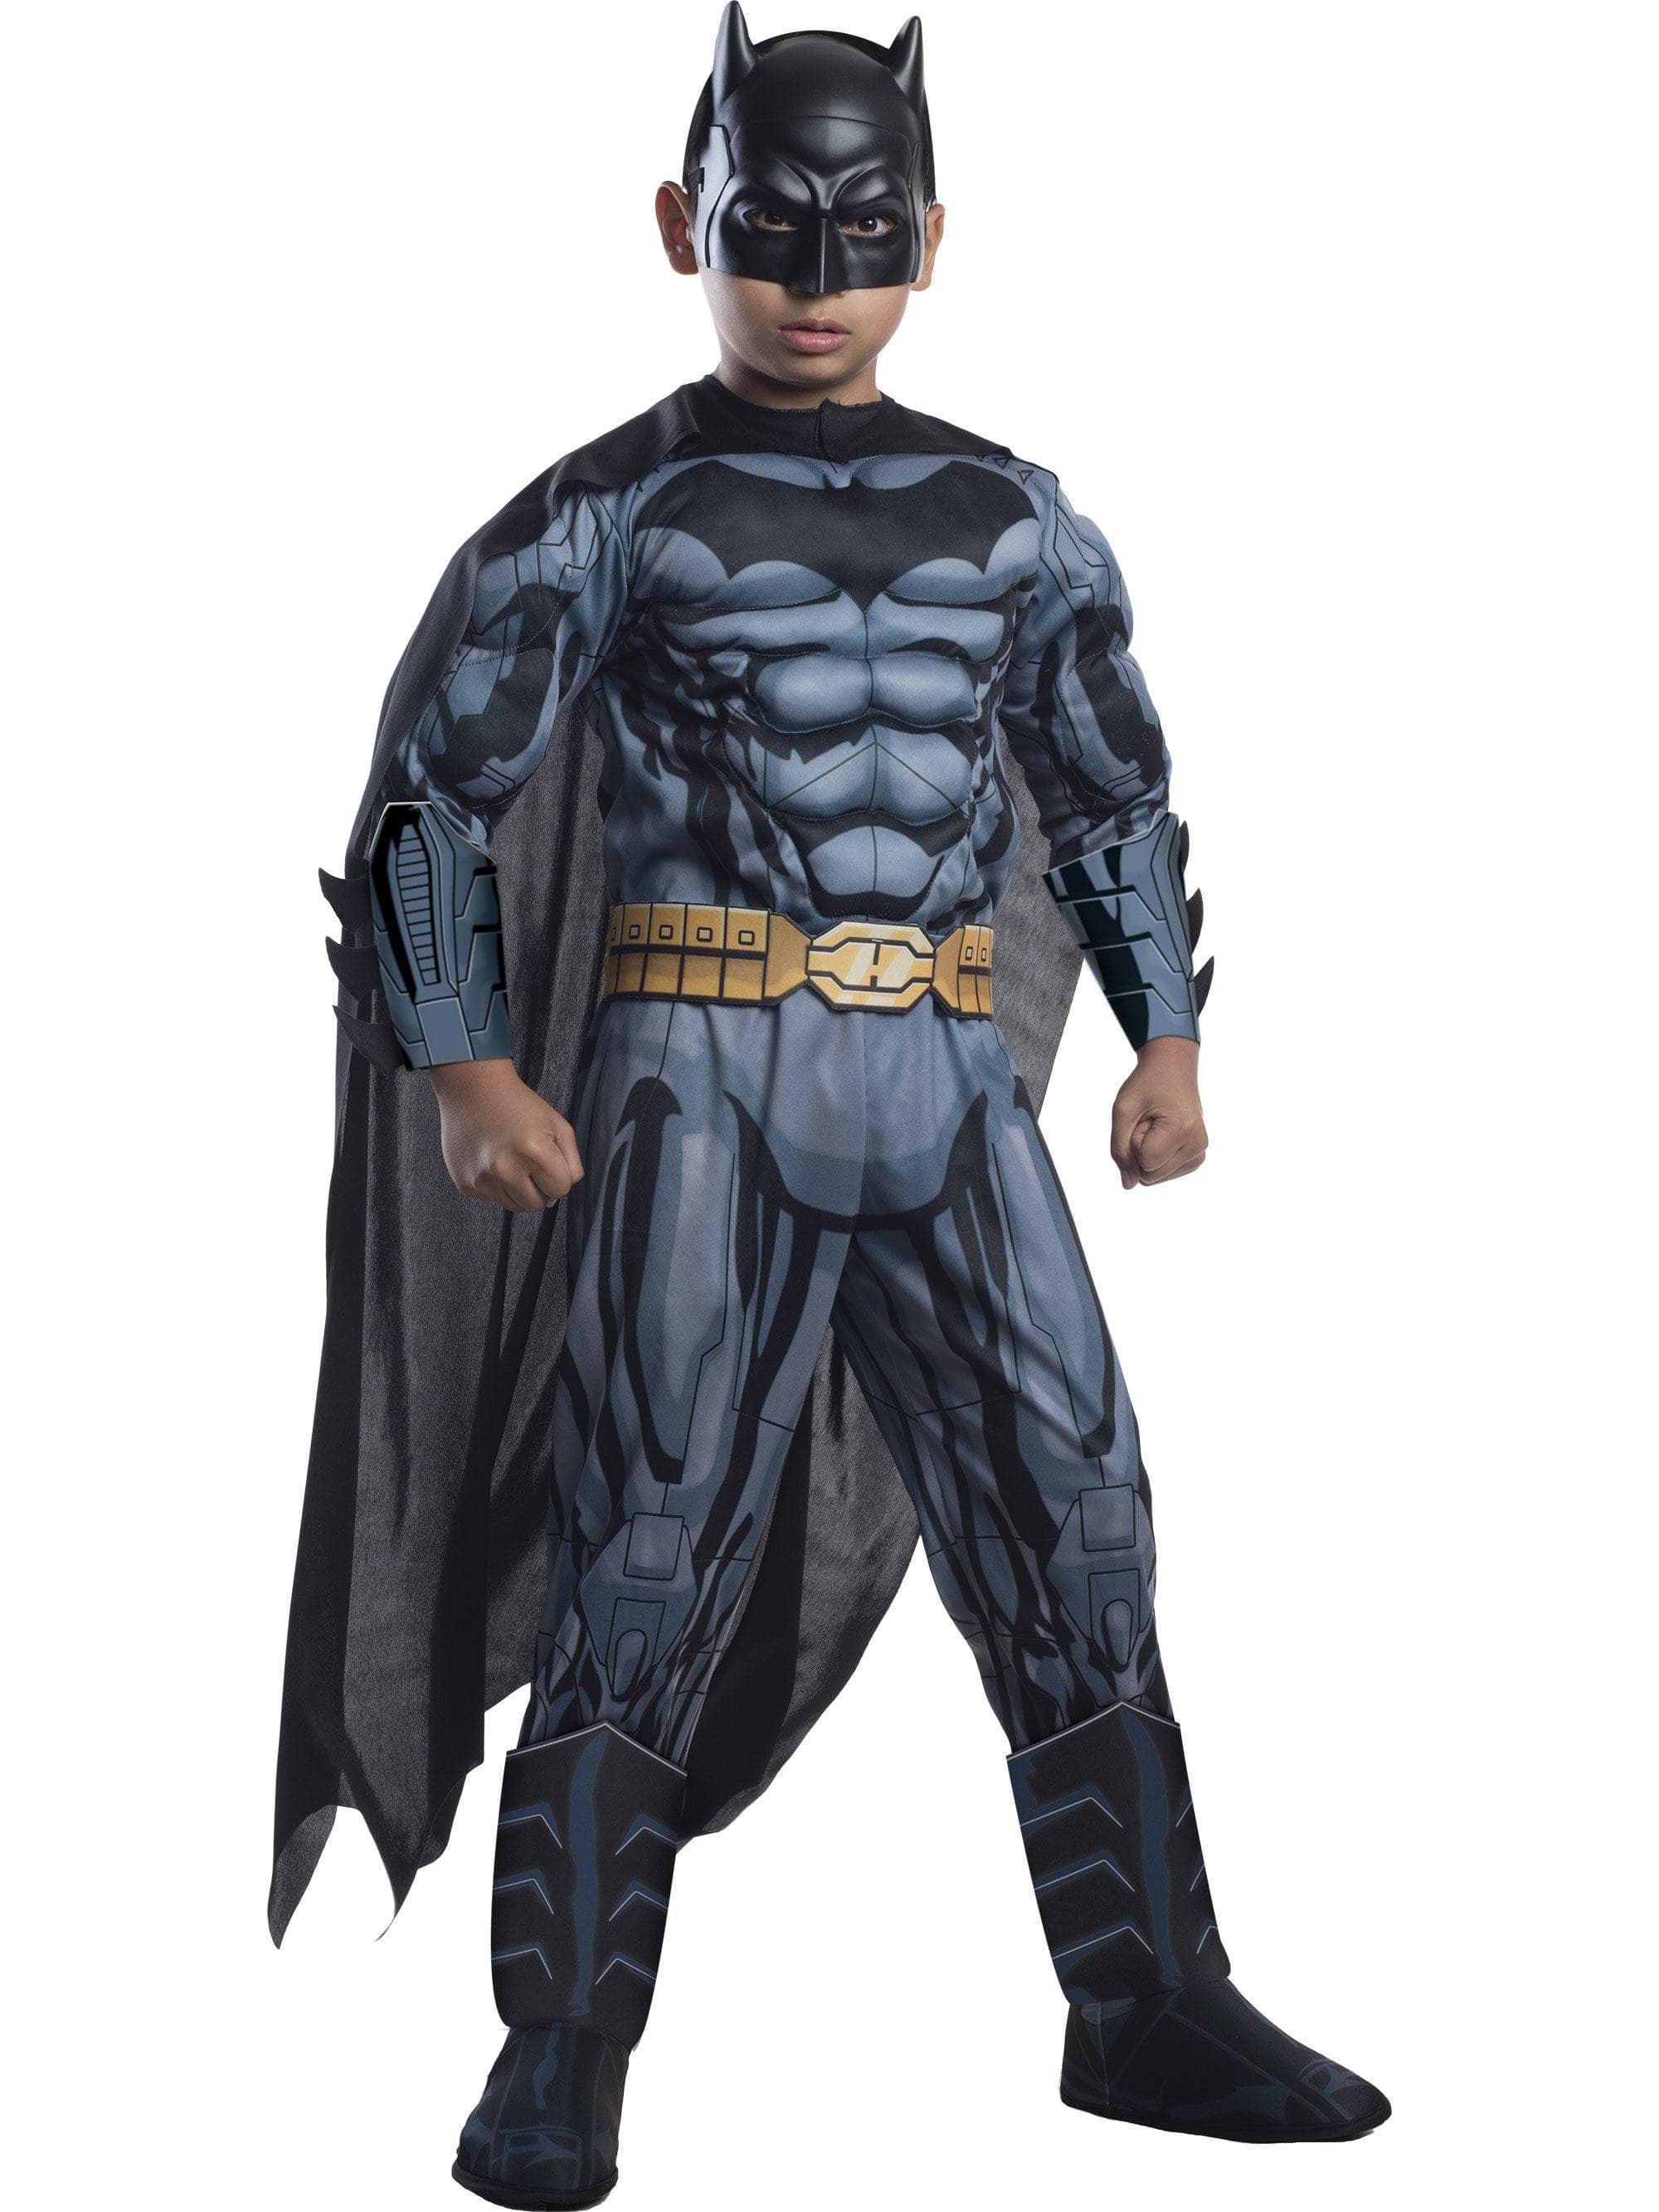 Kids Justice League Batman Deluxe Muscle Chest Costume - costumes.com